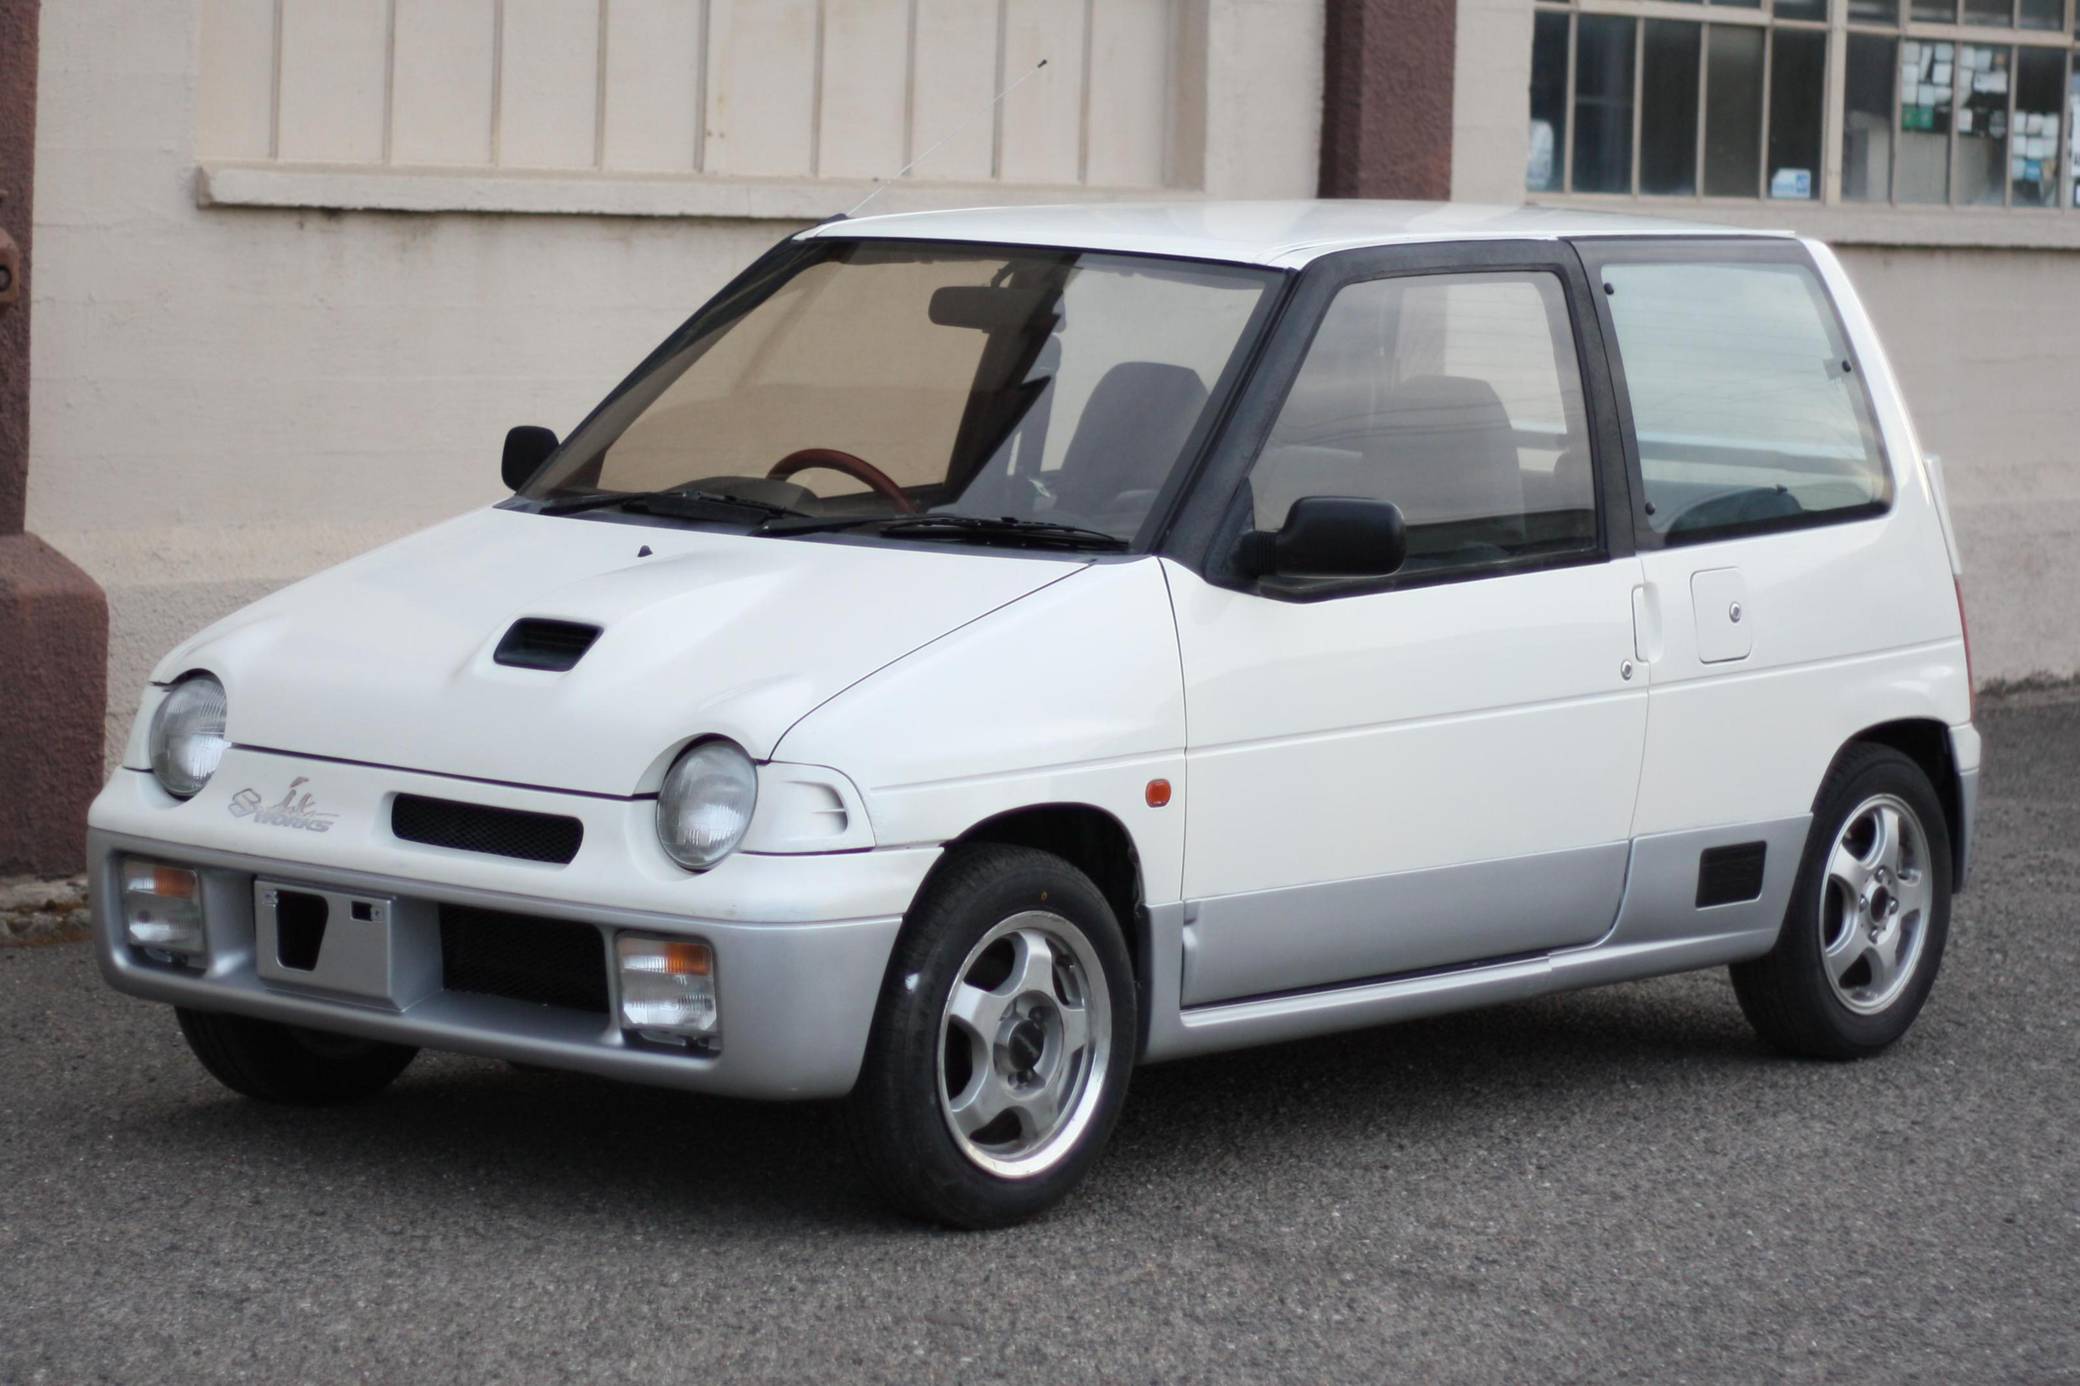 Suzuki Alto Custom Wrap Designs - Suzuki Fort Motors